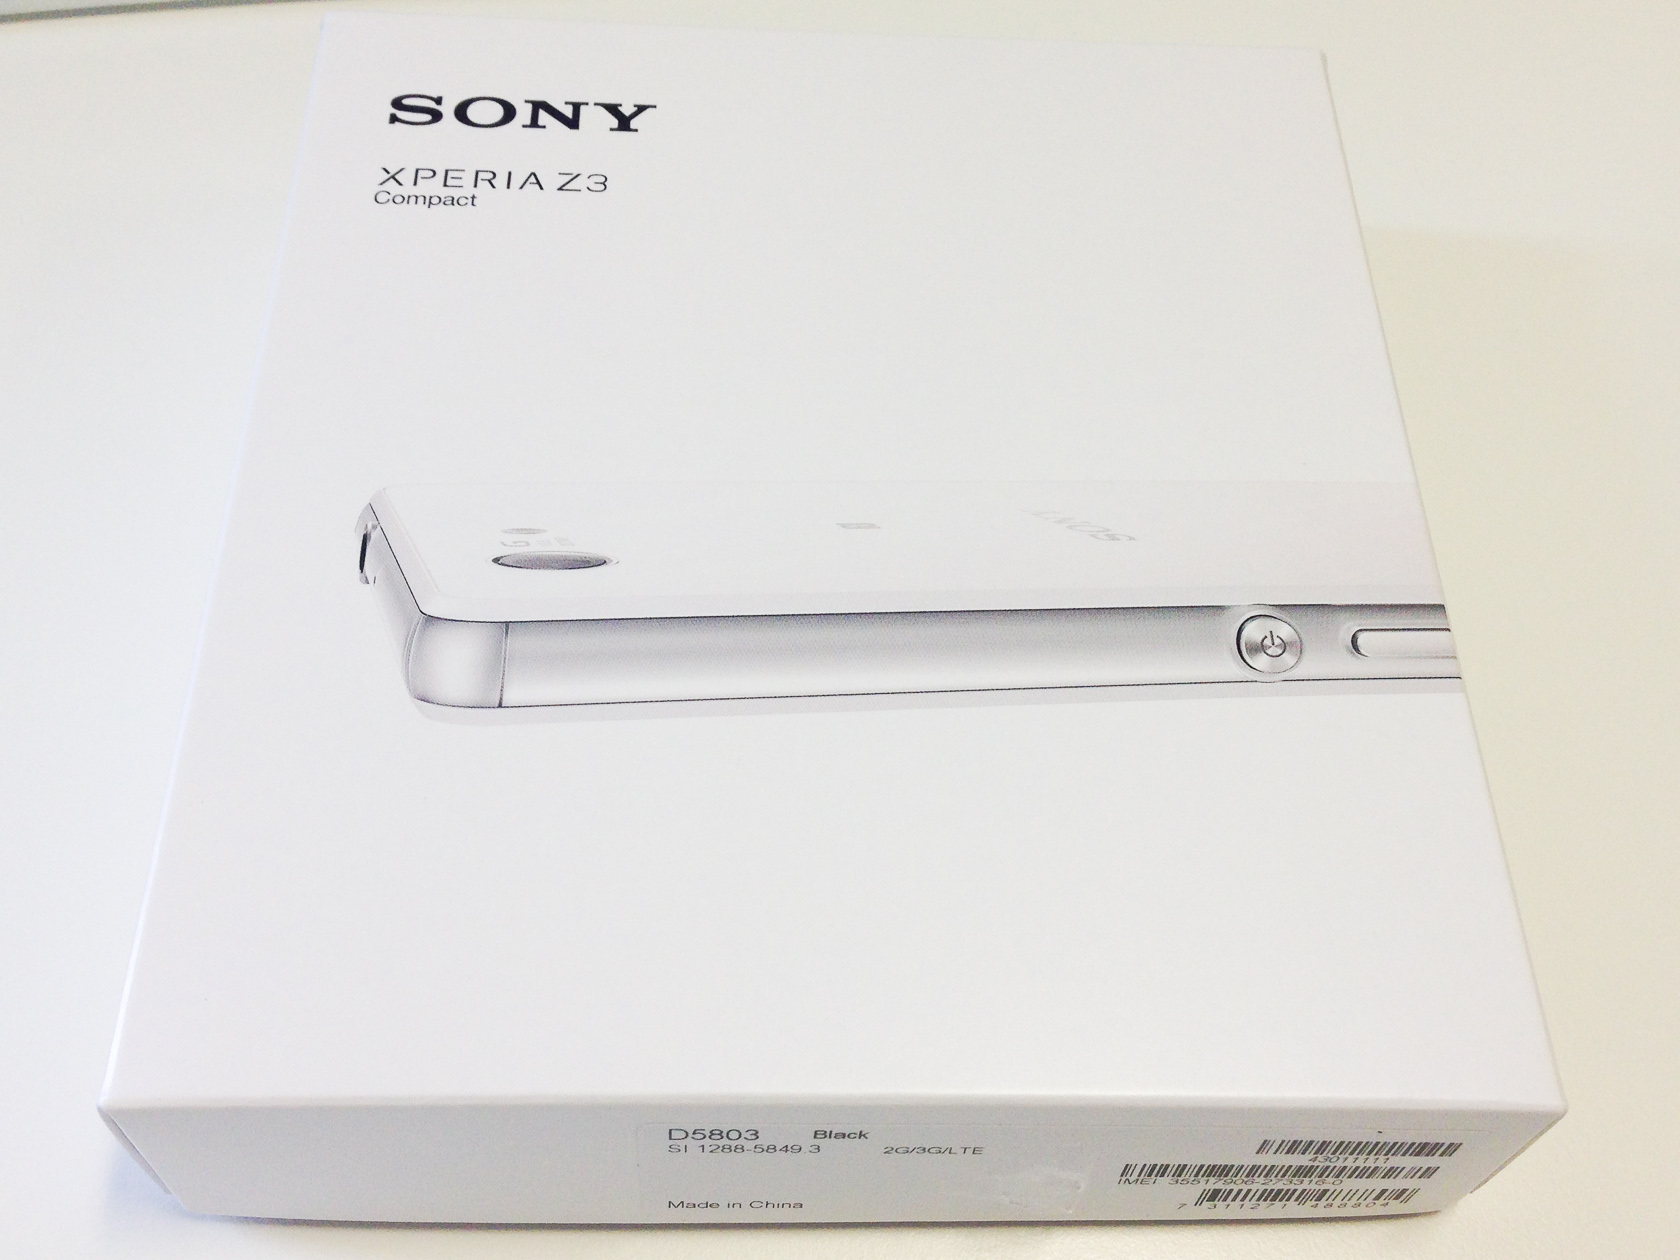 Liever pleegouders Opmerkelijk Sony Xperia Z3 Compact Review | Al4